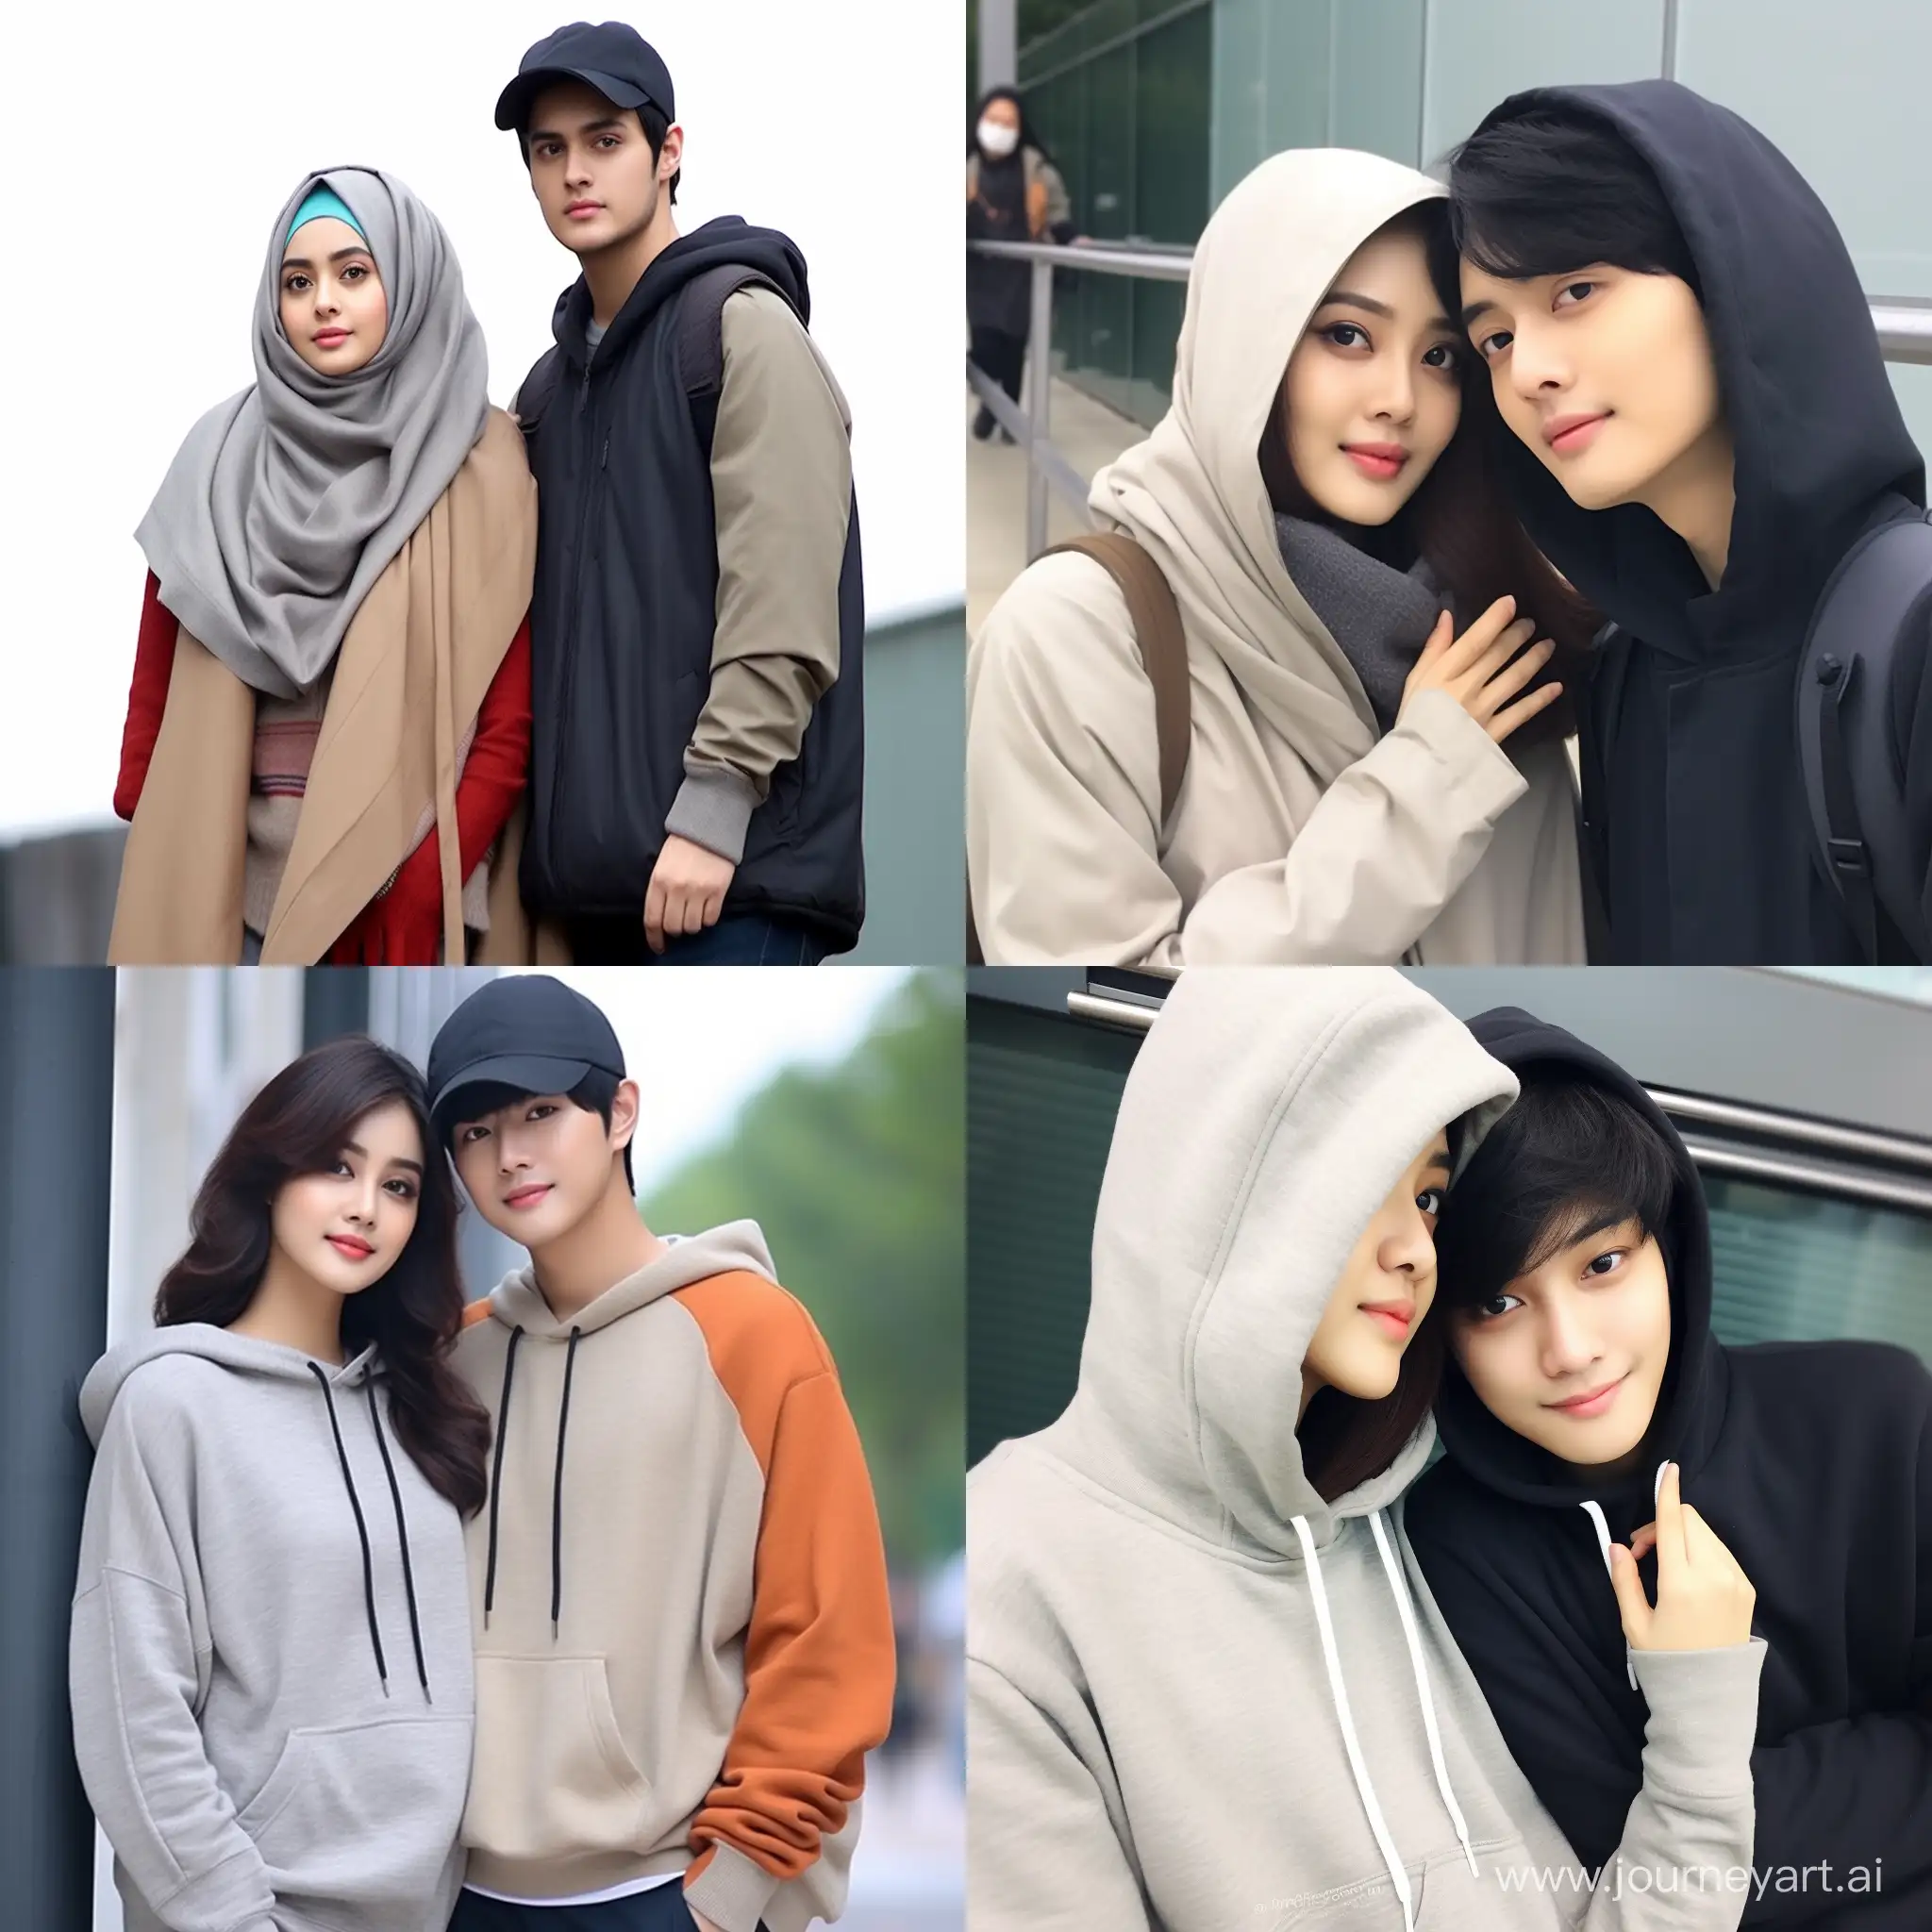 DO member of exo besides an Indonesian hijabi girl, look like loving couples